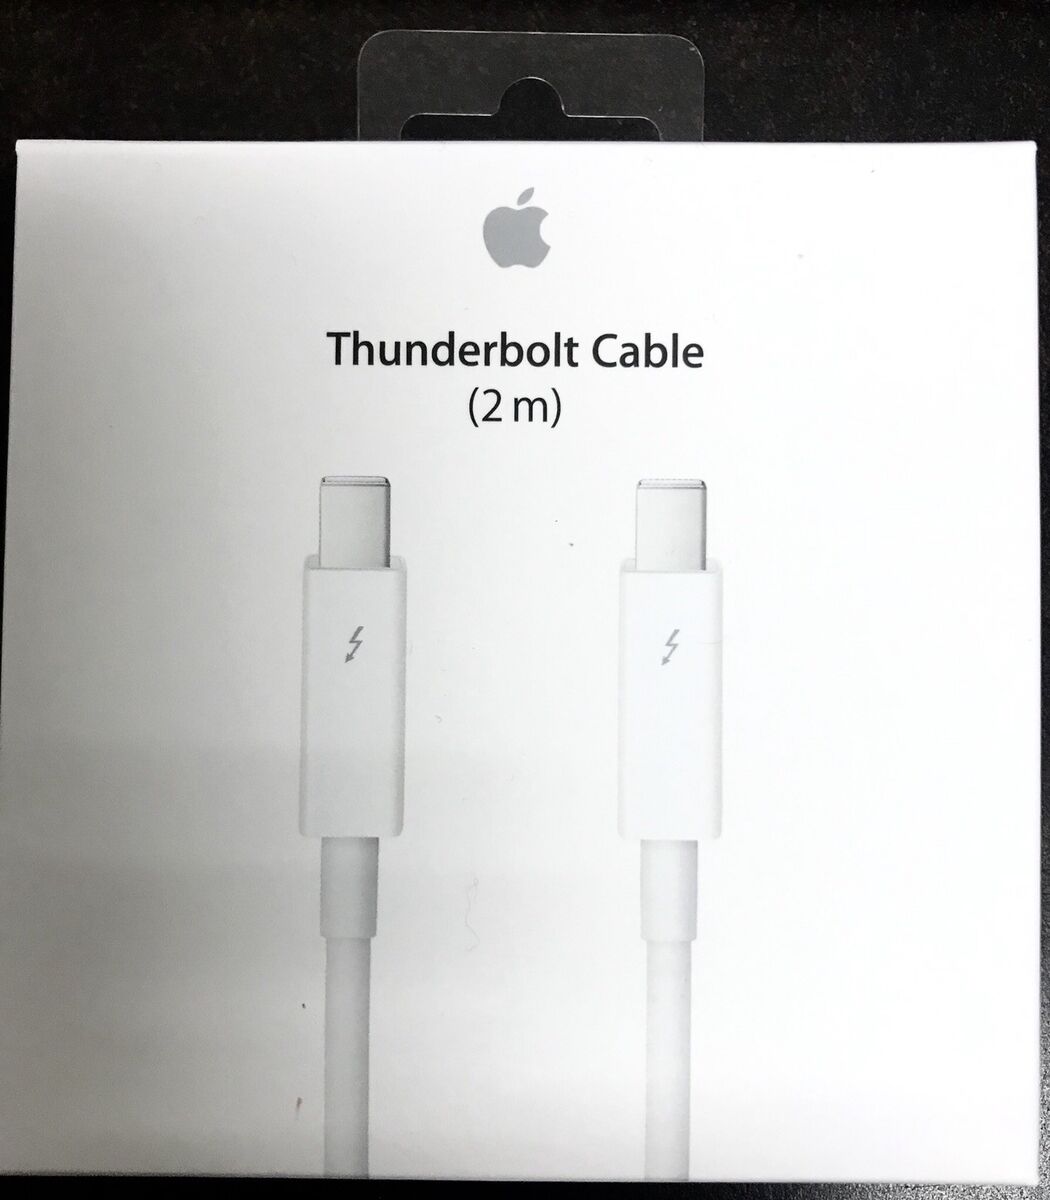 Cable Apple Thunderbolt (2,0 M) - Blanco Original En Caja